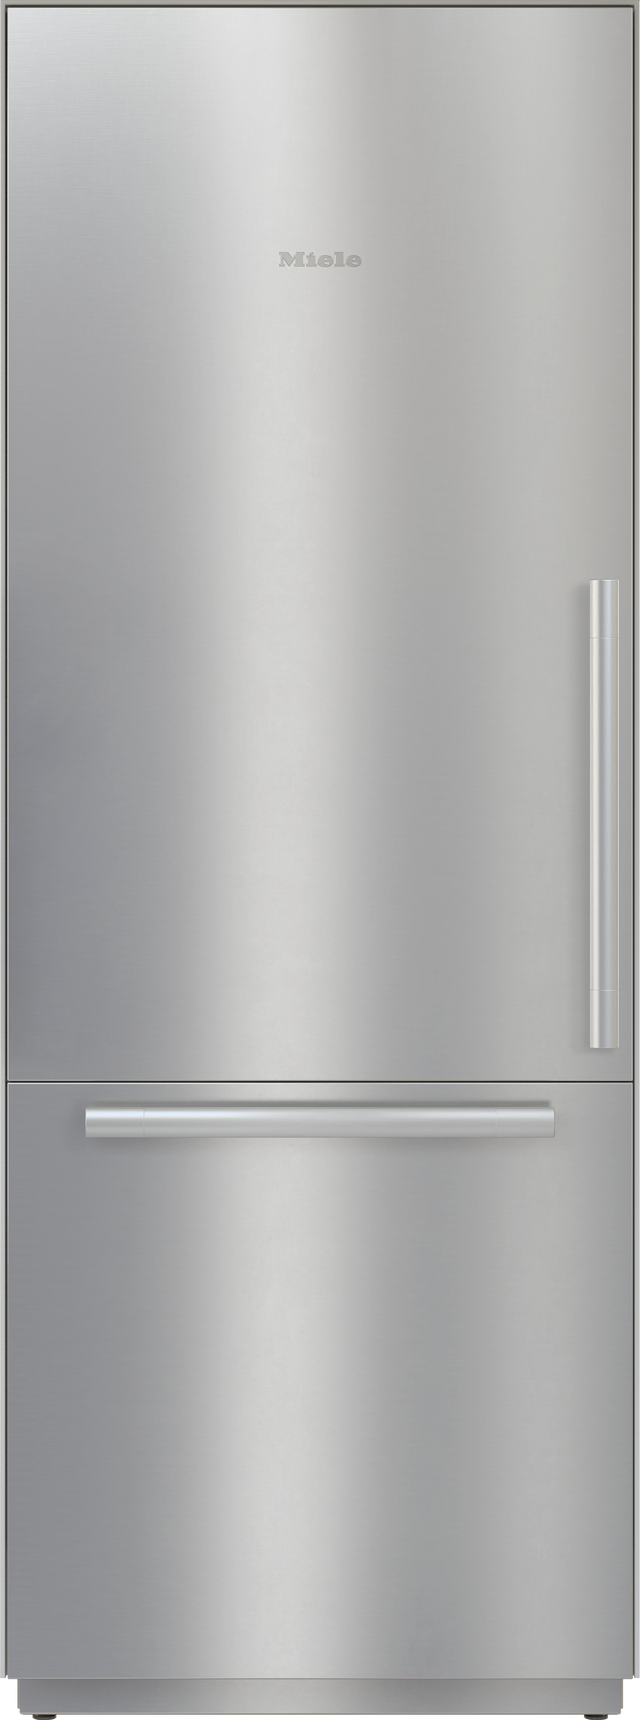 Miele MasterCool™ 16.0 Cu. Ft. Stainless Steel Built-In Bottom Freezer Refrigerator